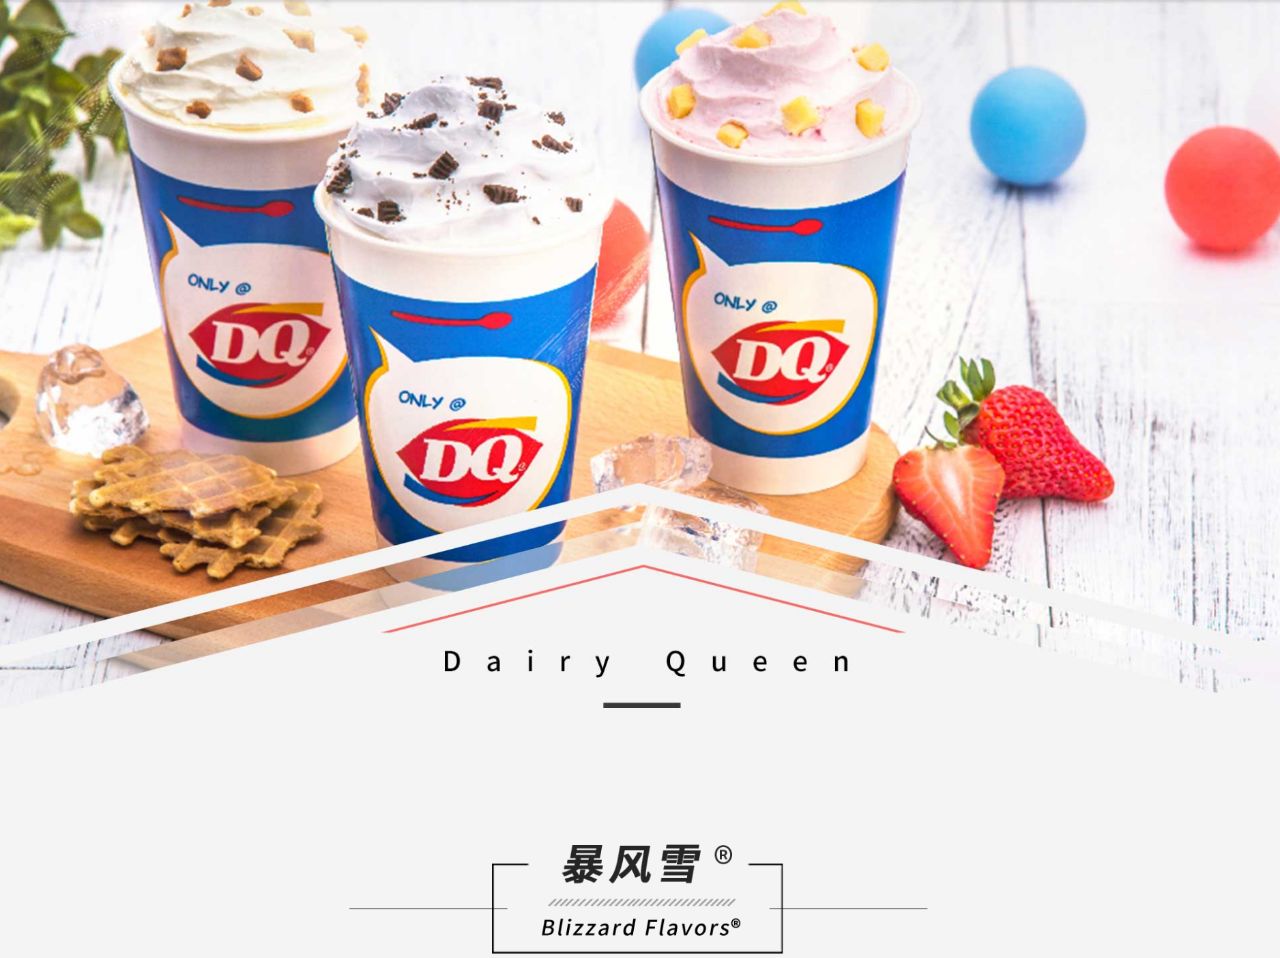 DQ冰淇淋在泰国新出了阿华田口味暴风雪，40泰铢起步，真挺好吃-搜狐大视野-搜狐新闻